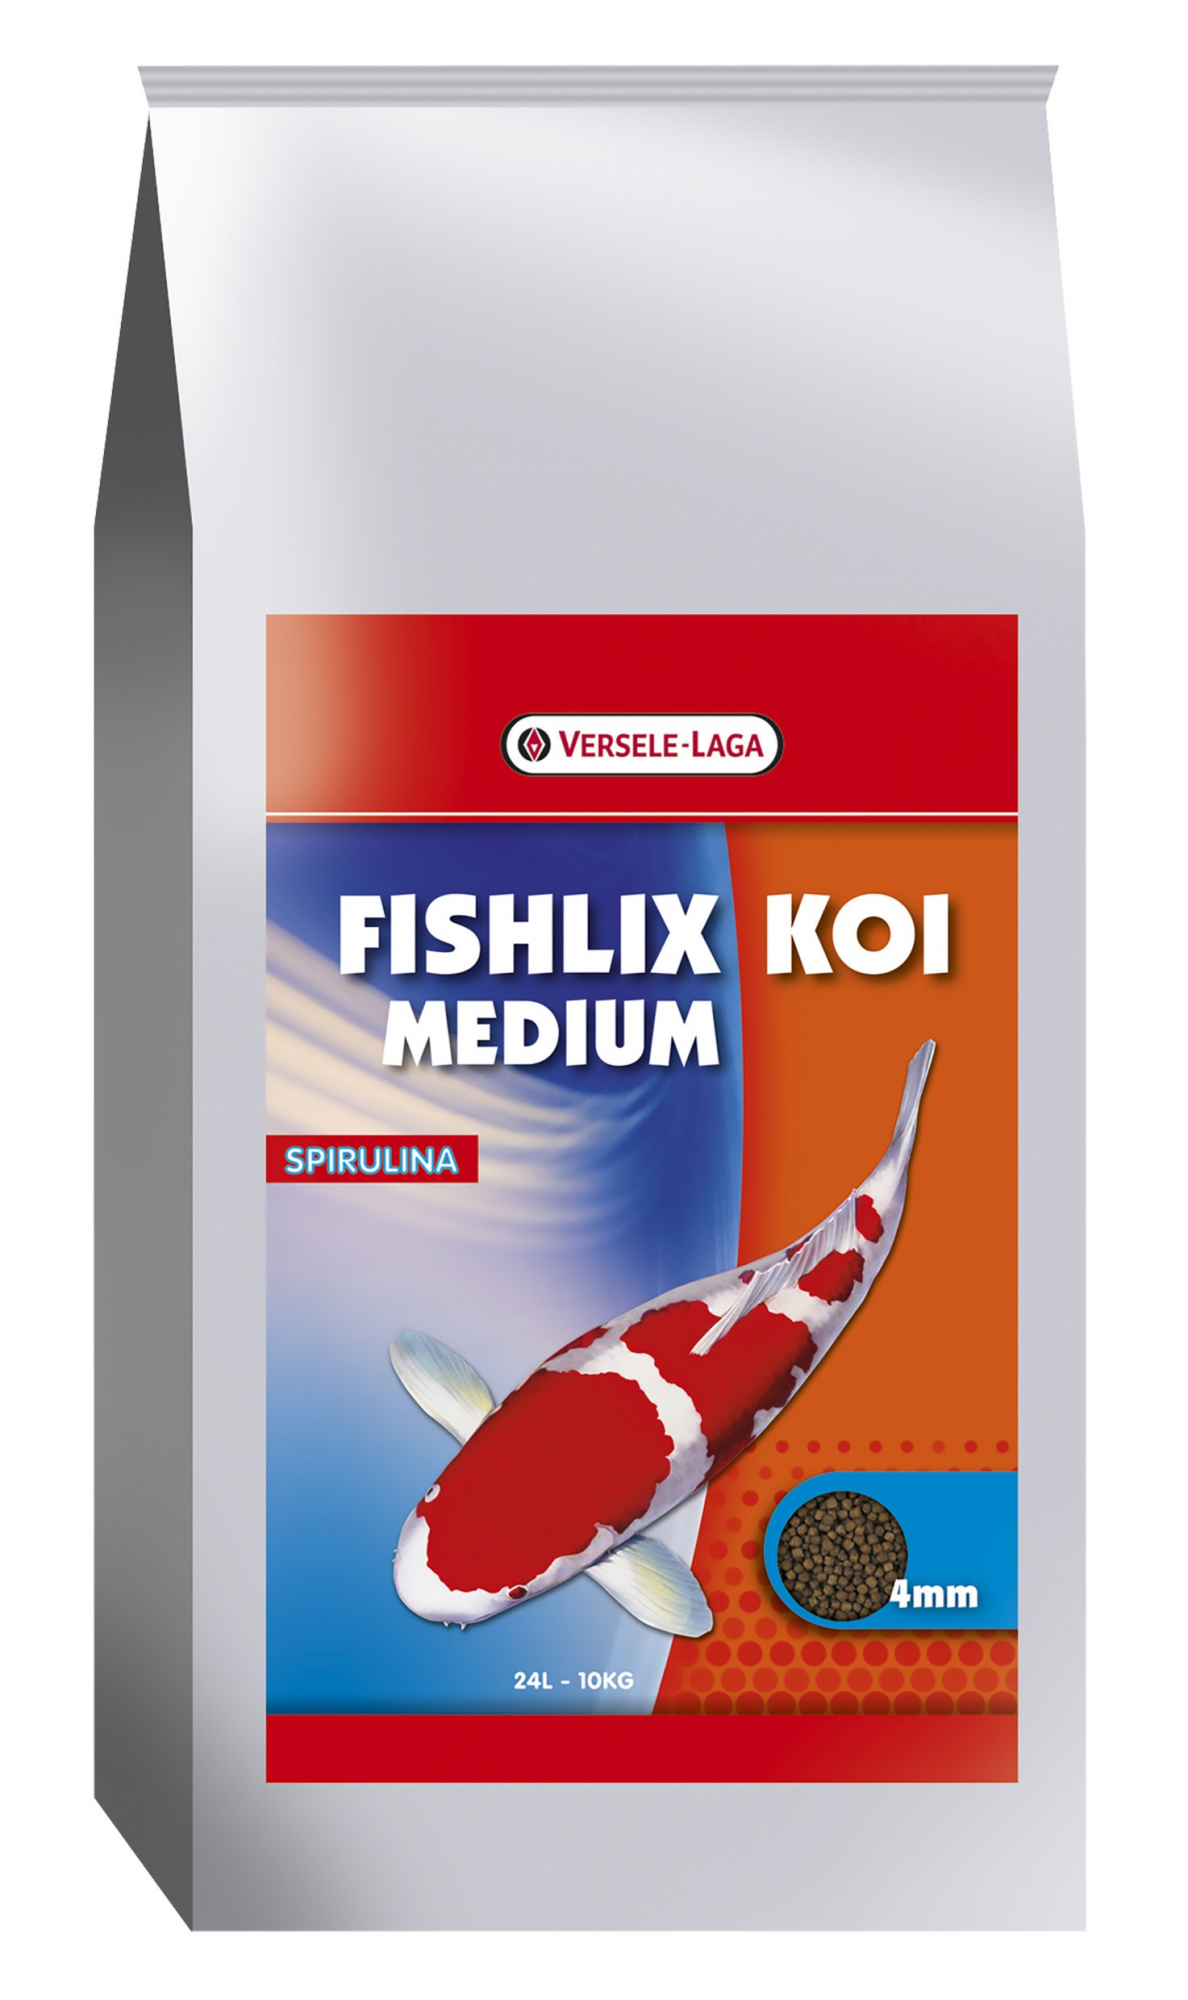 Fishlix Koi Medium 4 mm - granulado flotantes para koi 